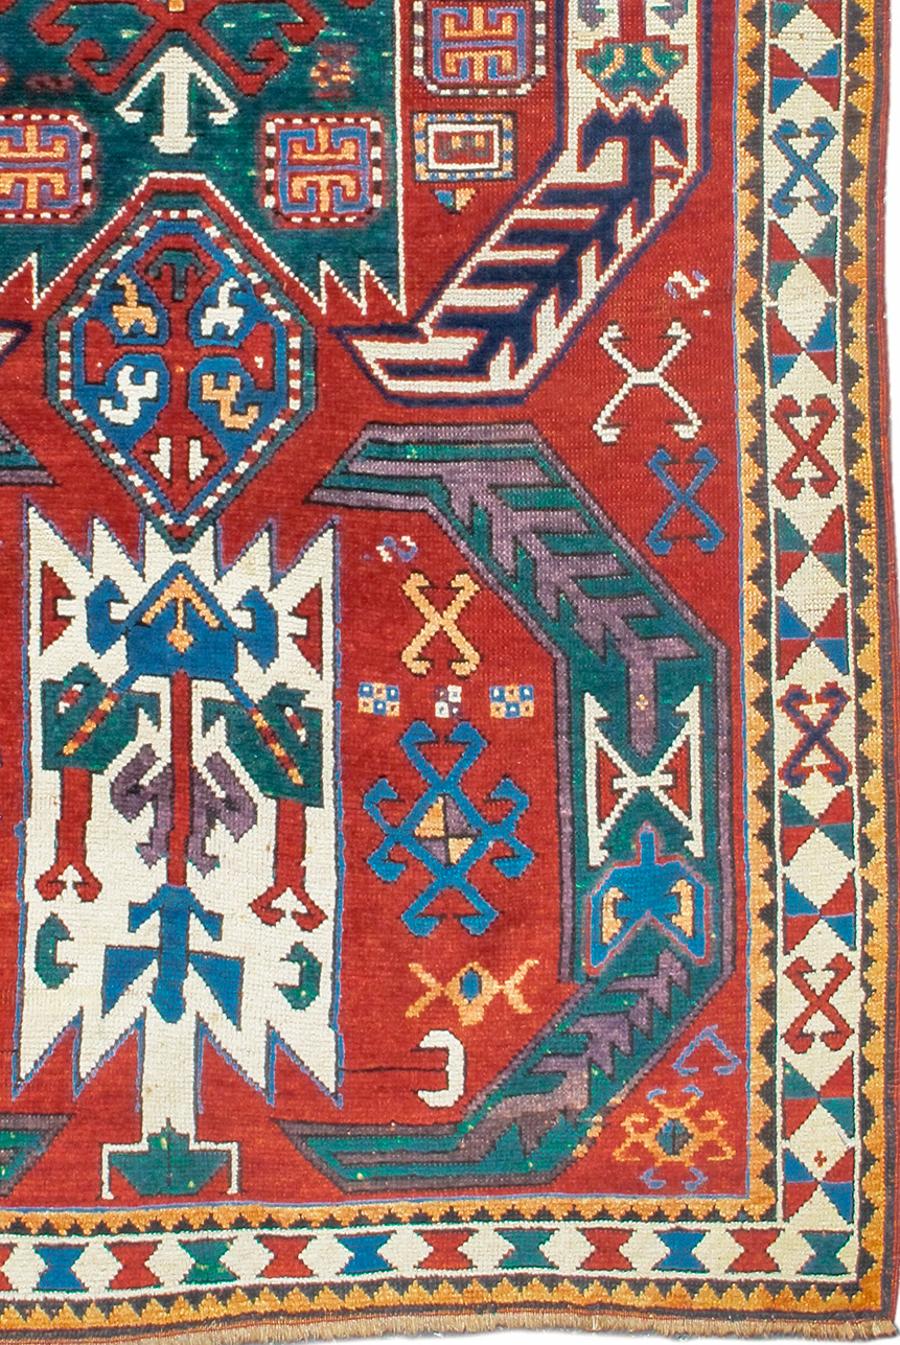 Caucasian Kasim Ushag rug from the late 19th century, measures 4'6